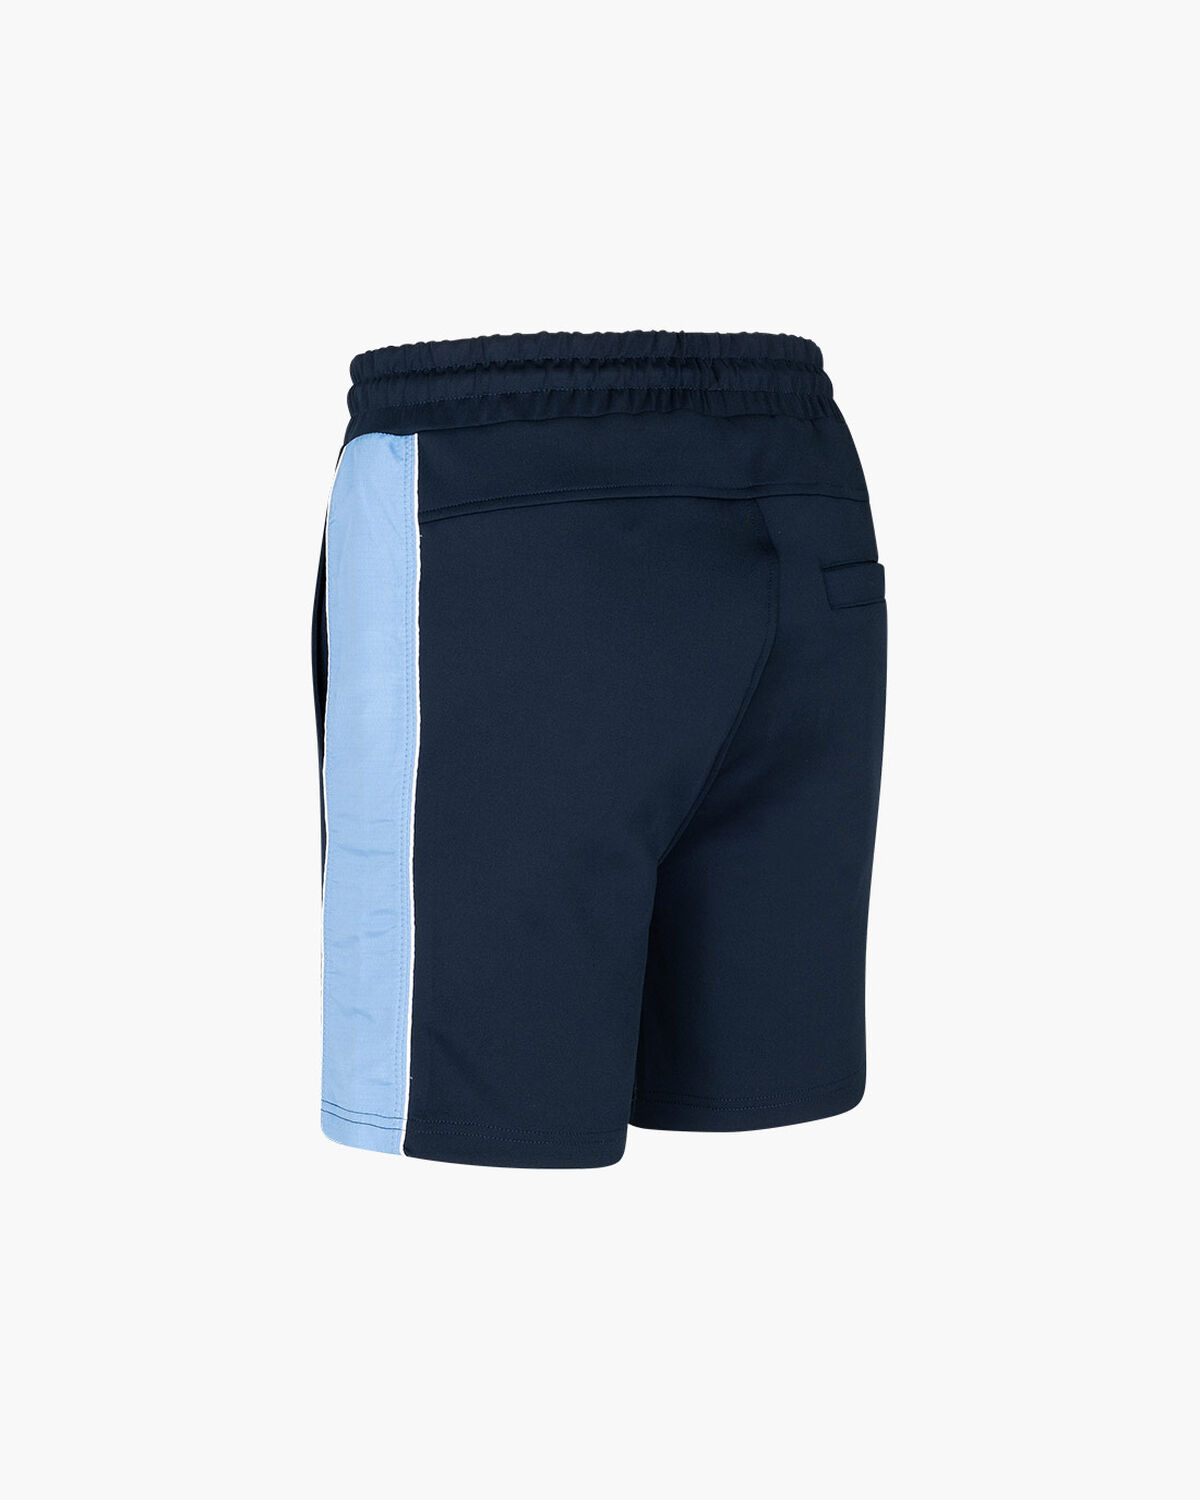 Saul Shorts, Navy/Blue, hi-res